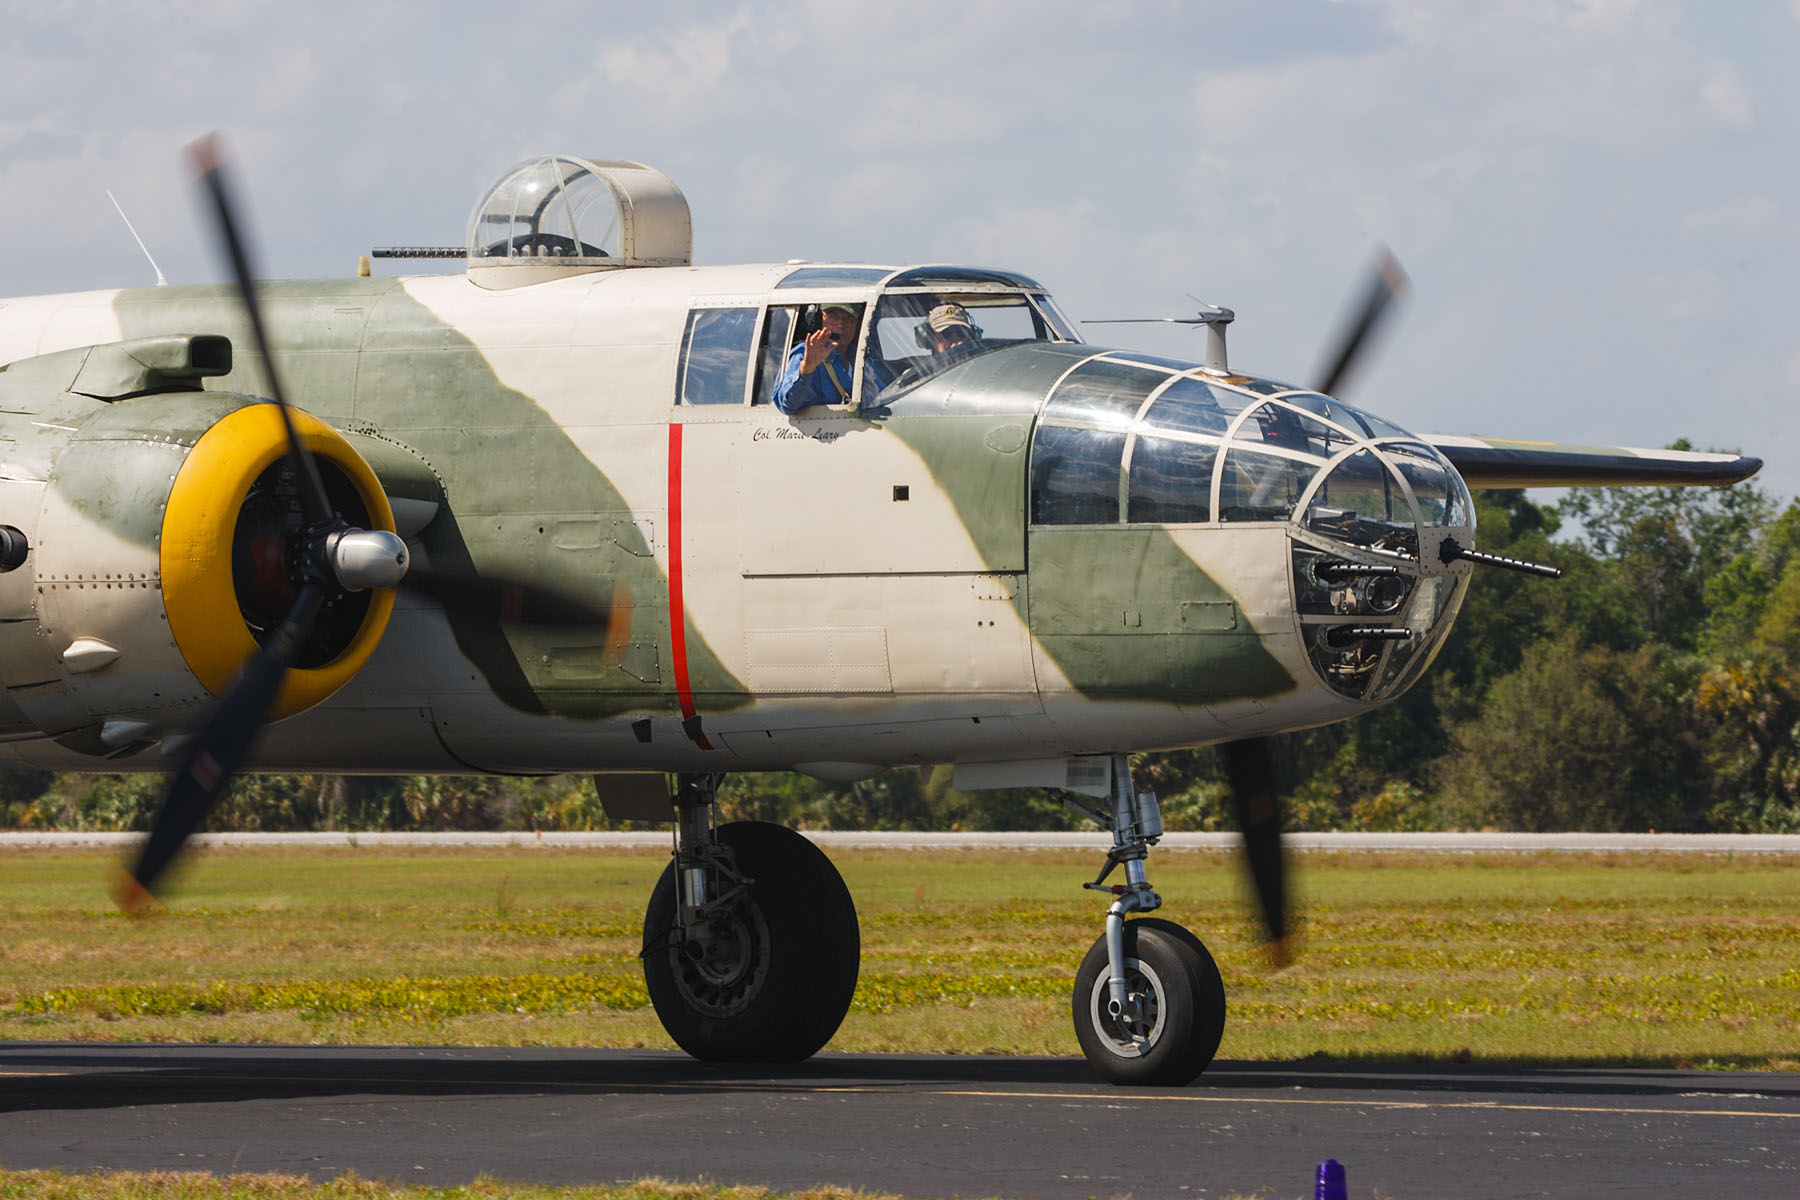 B-25 Mitchell bomber, TICO Warbirds Air Show, Titusville, Florida.  Click for next photo.